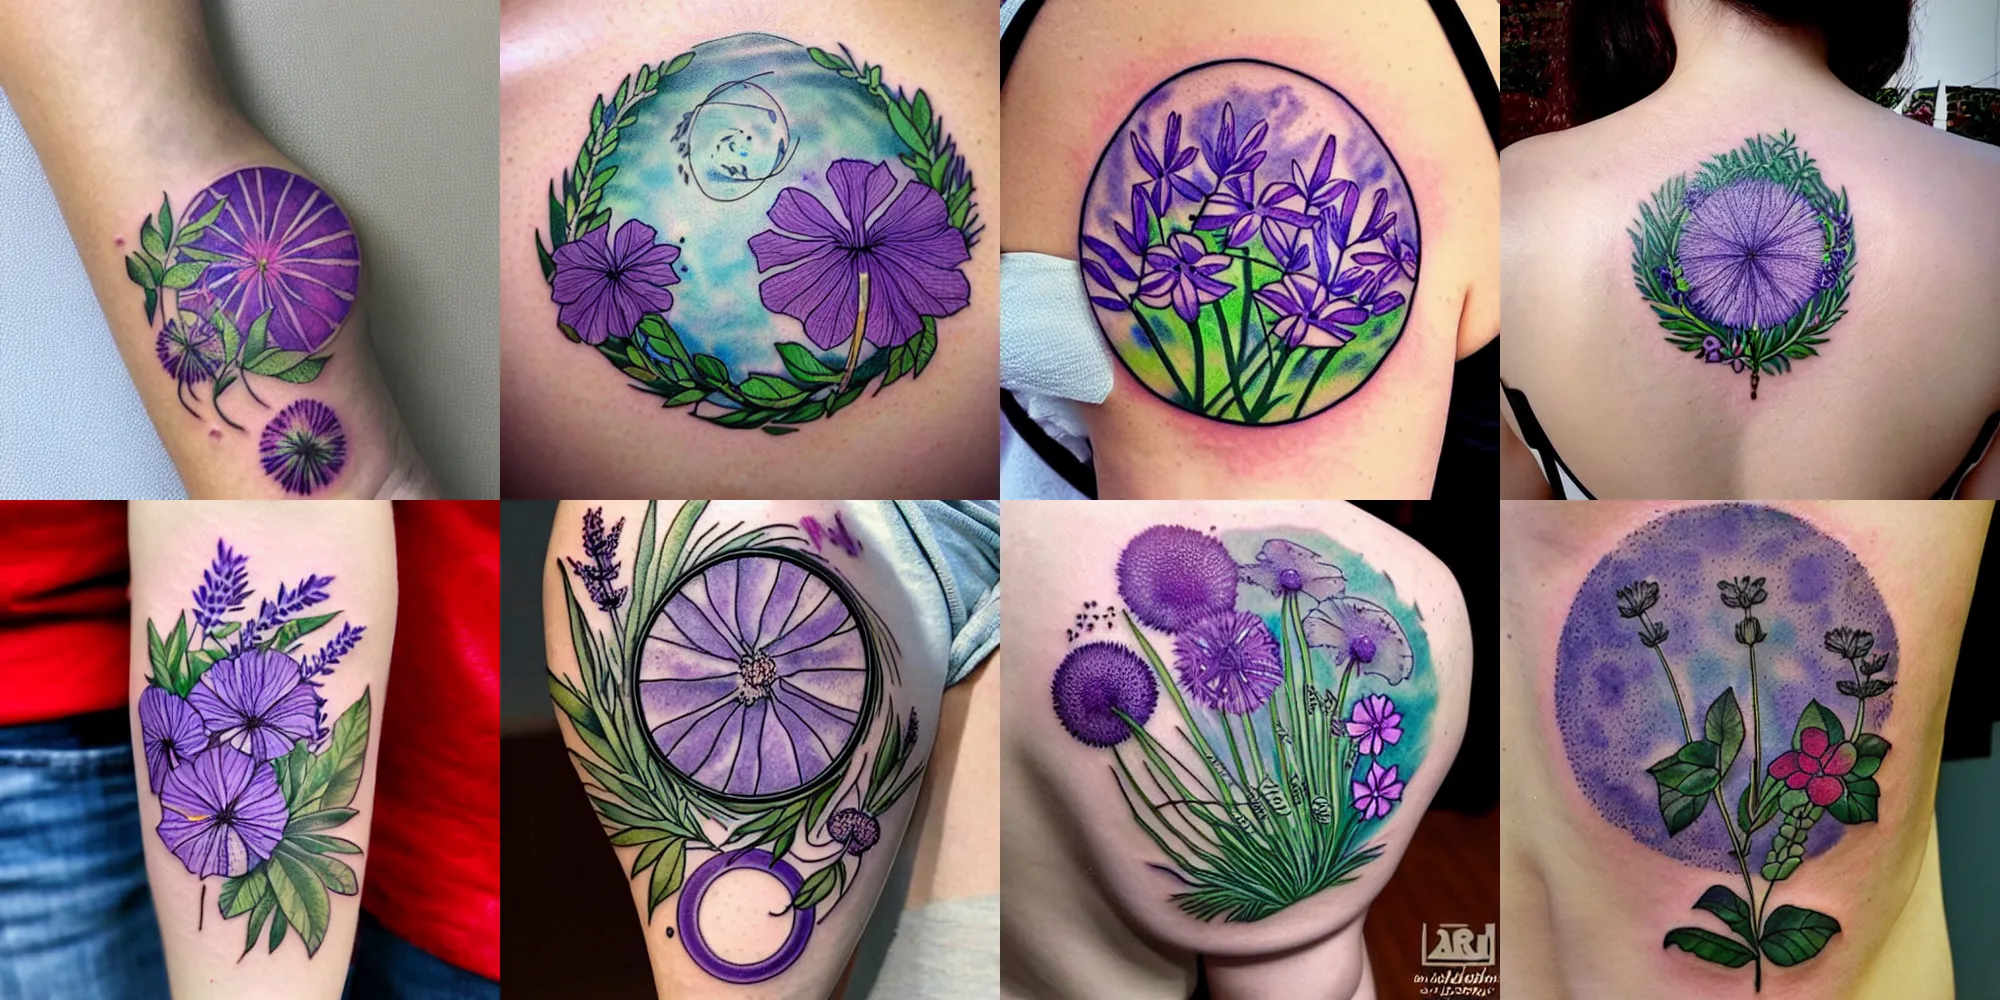 Dandelion Flower Temporary Tattoos - Flash Tattoo Sticker Body Art Tattoos  1pc | eBay